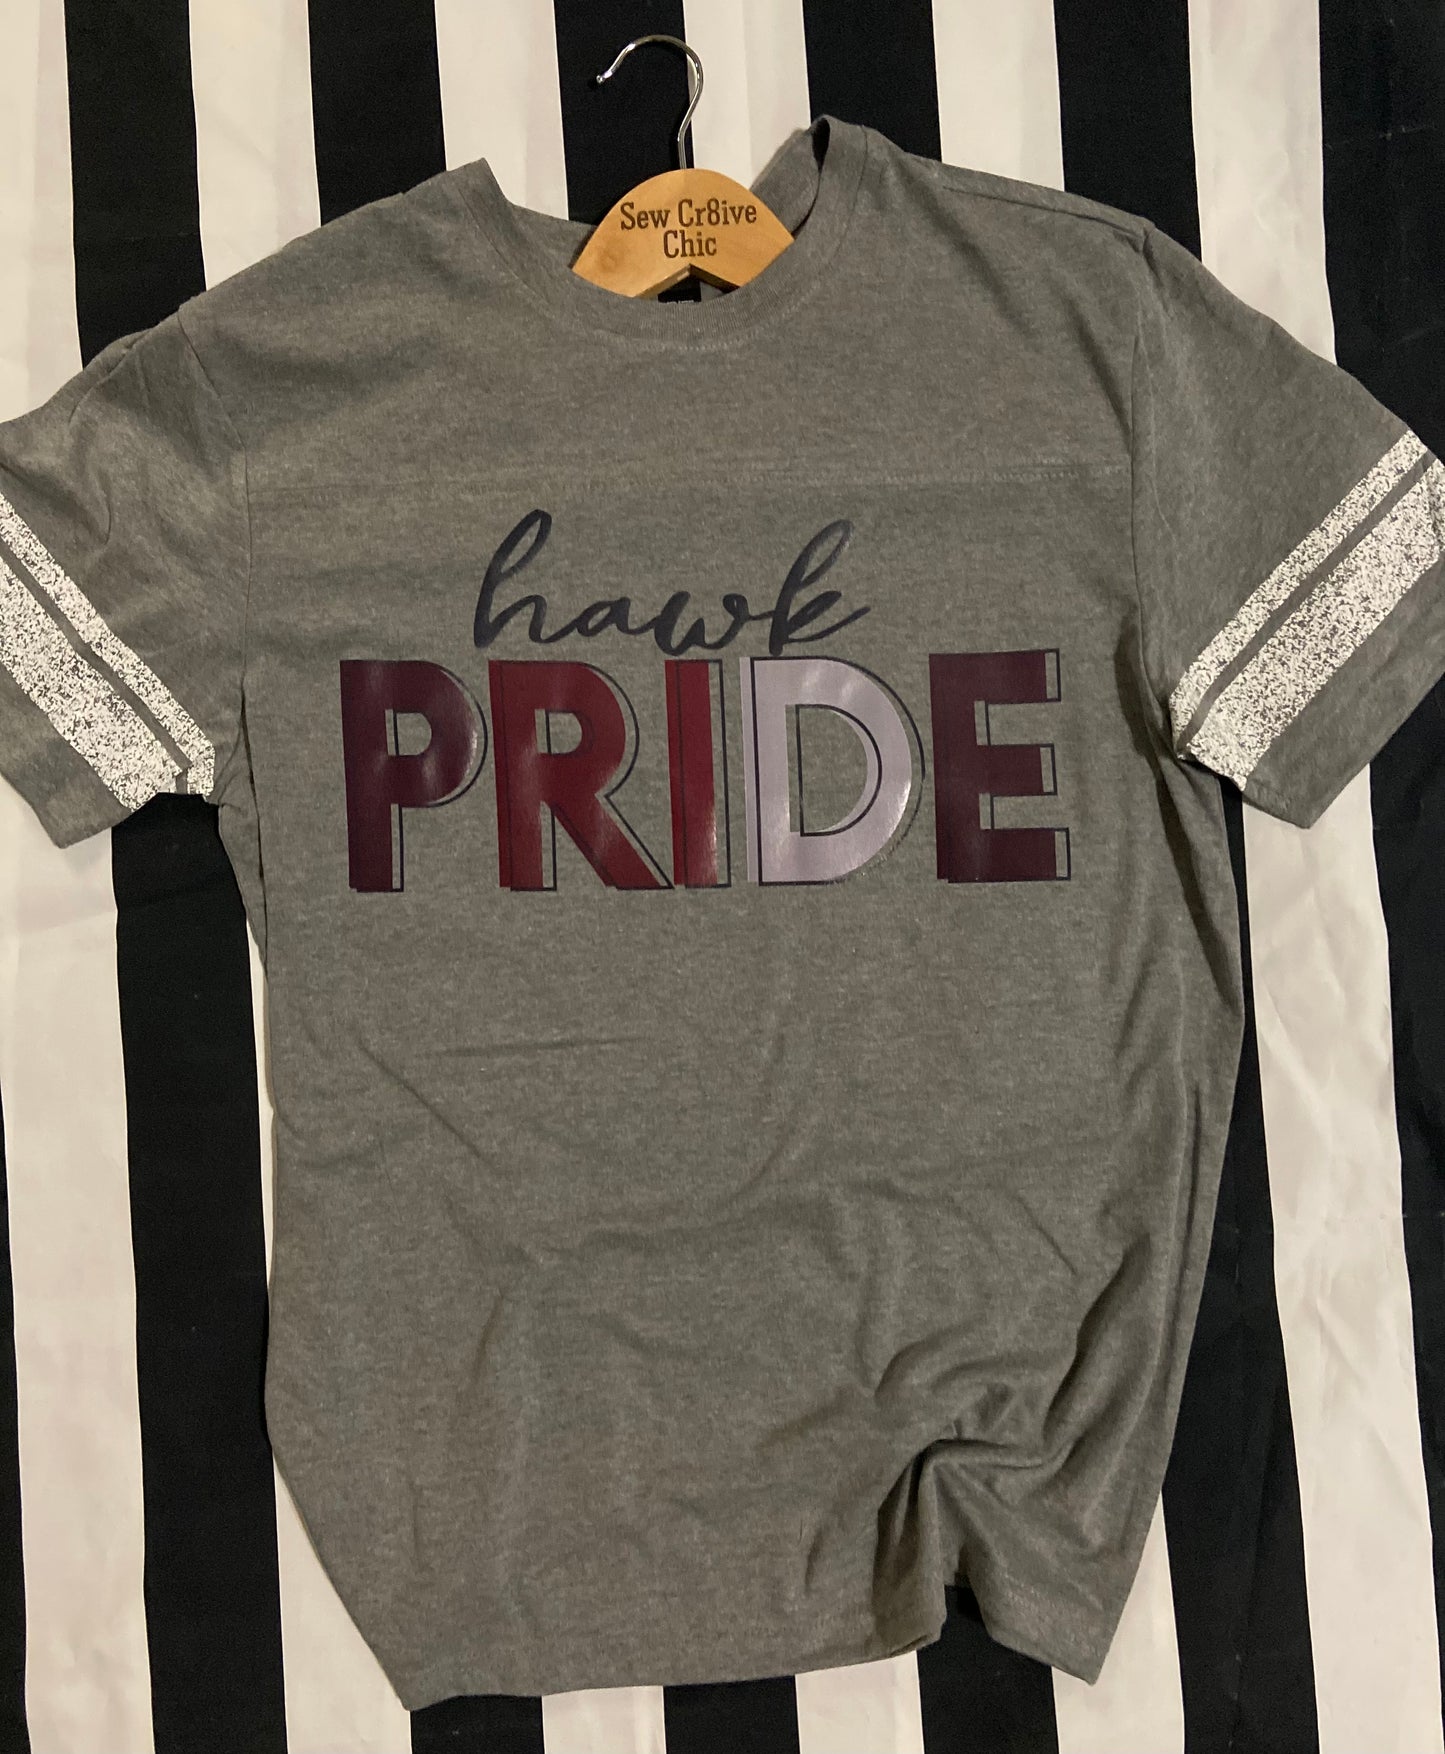 School Pride shirts